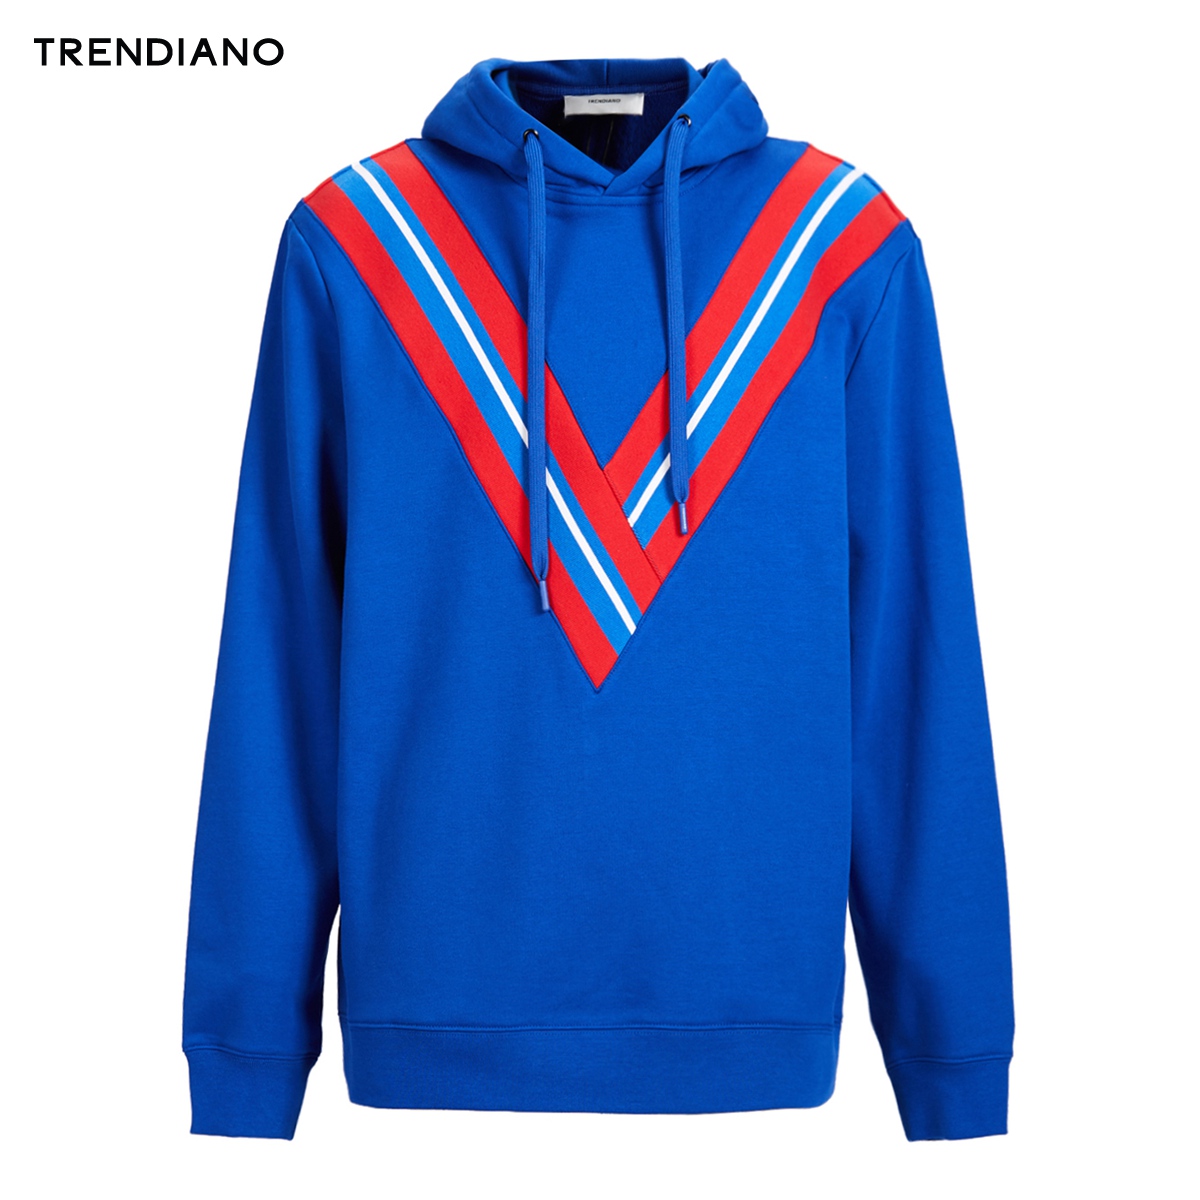 TRENDIANO男装冬装学院风条纹拼接连帽套头卫衣3GC4041450,降价幅度28.6%